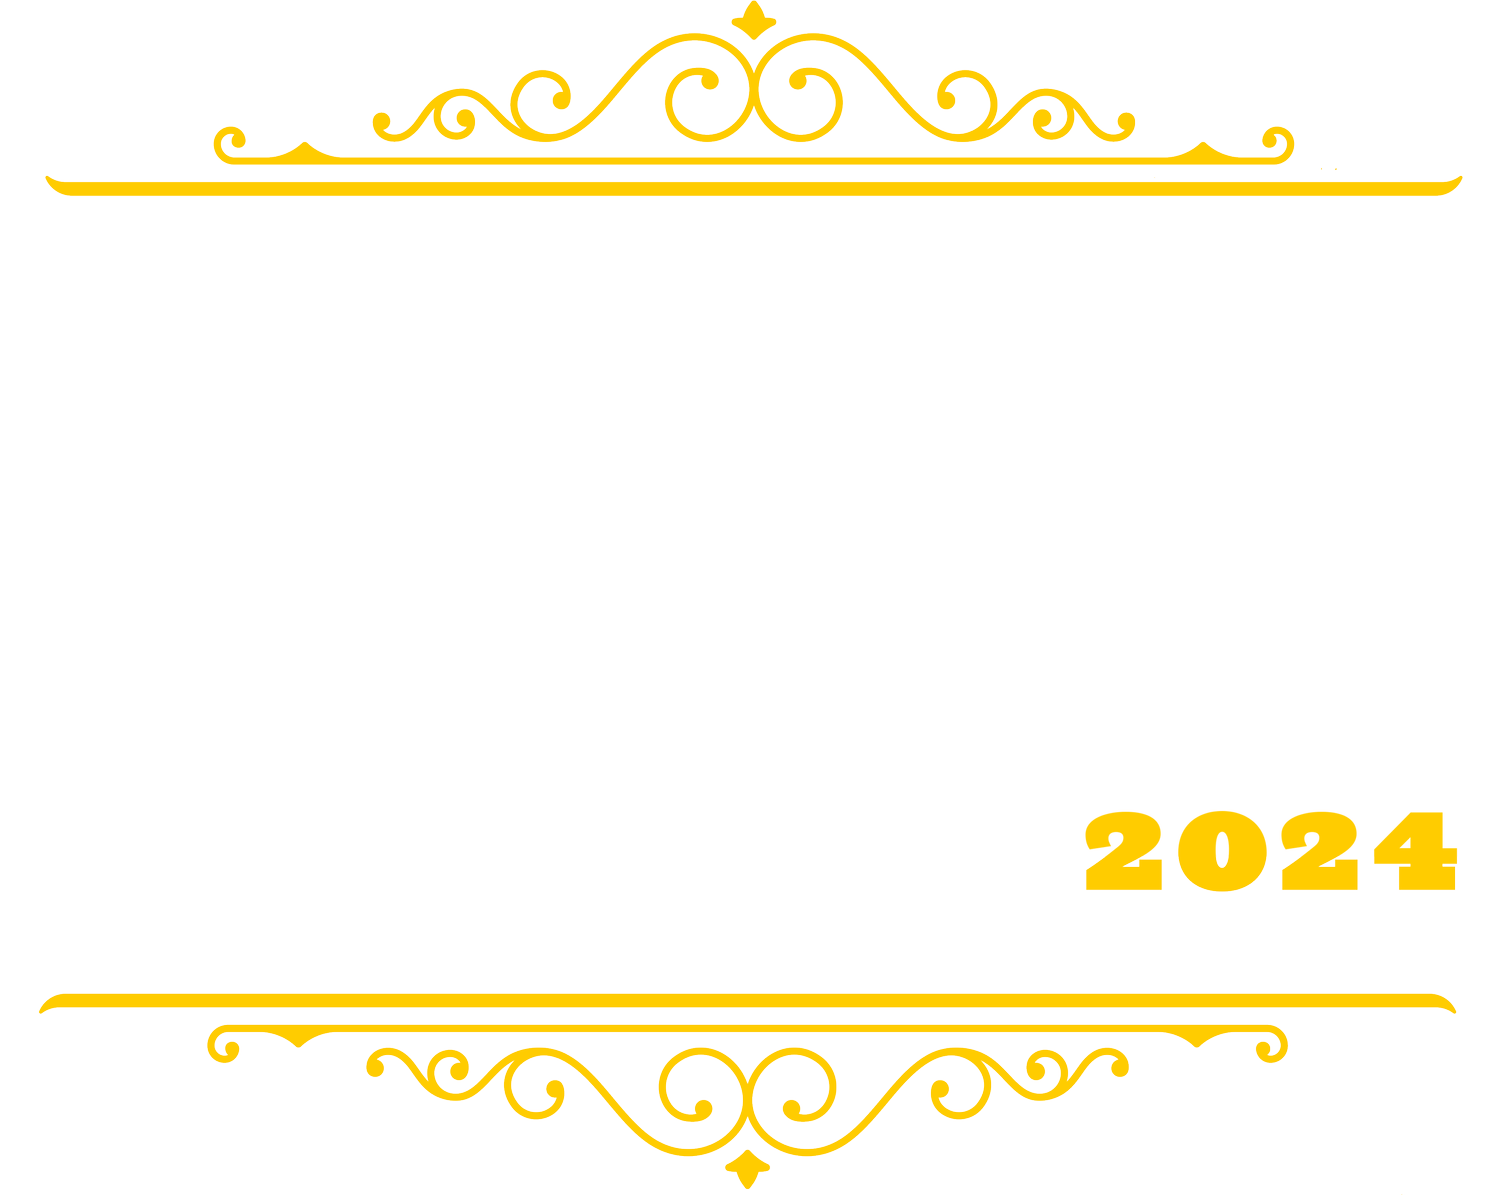 BACK PORCH FESTIVAL